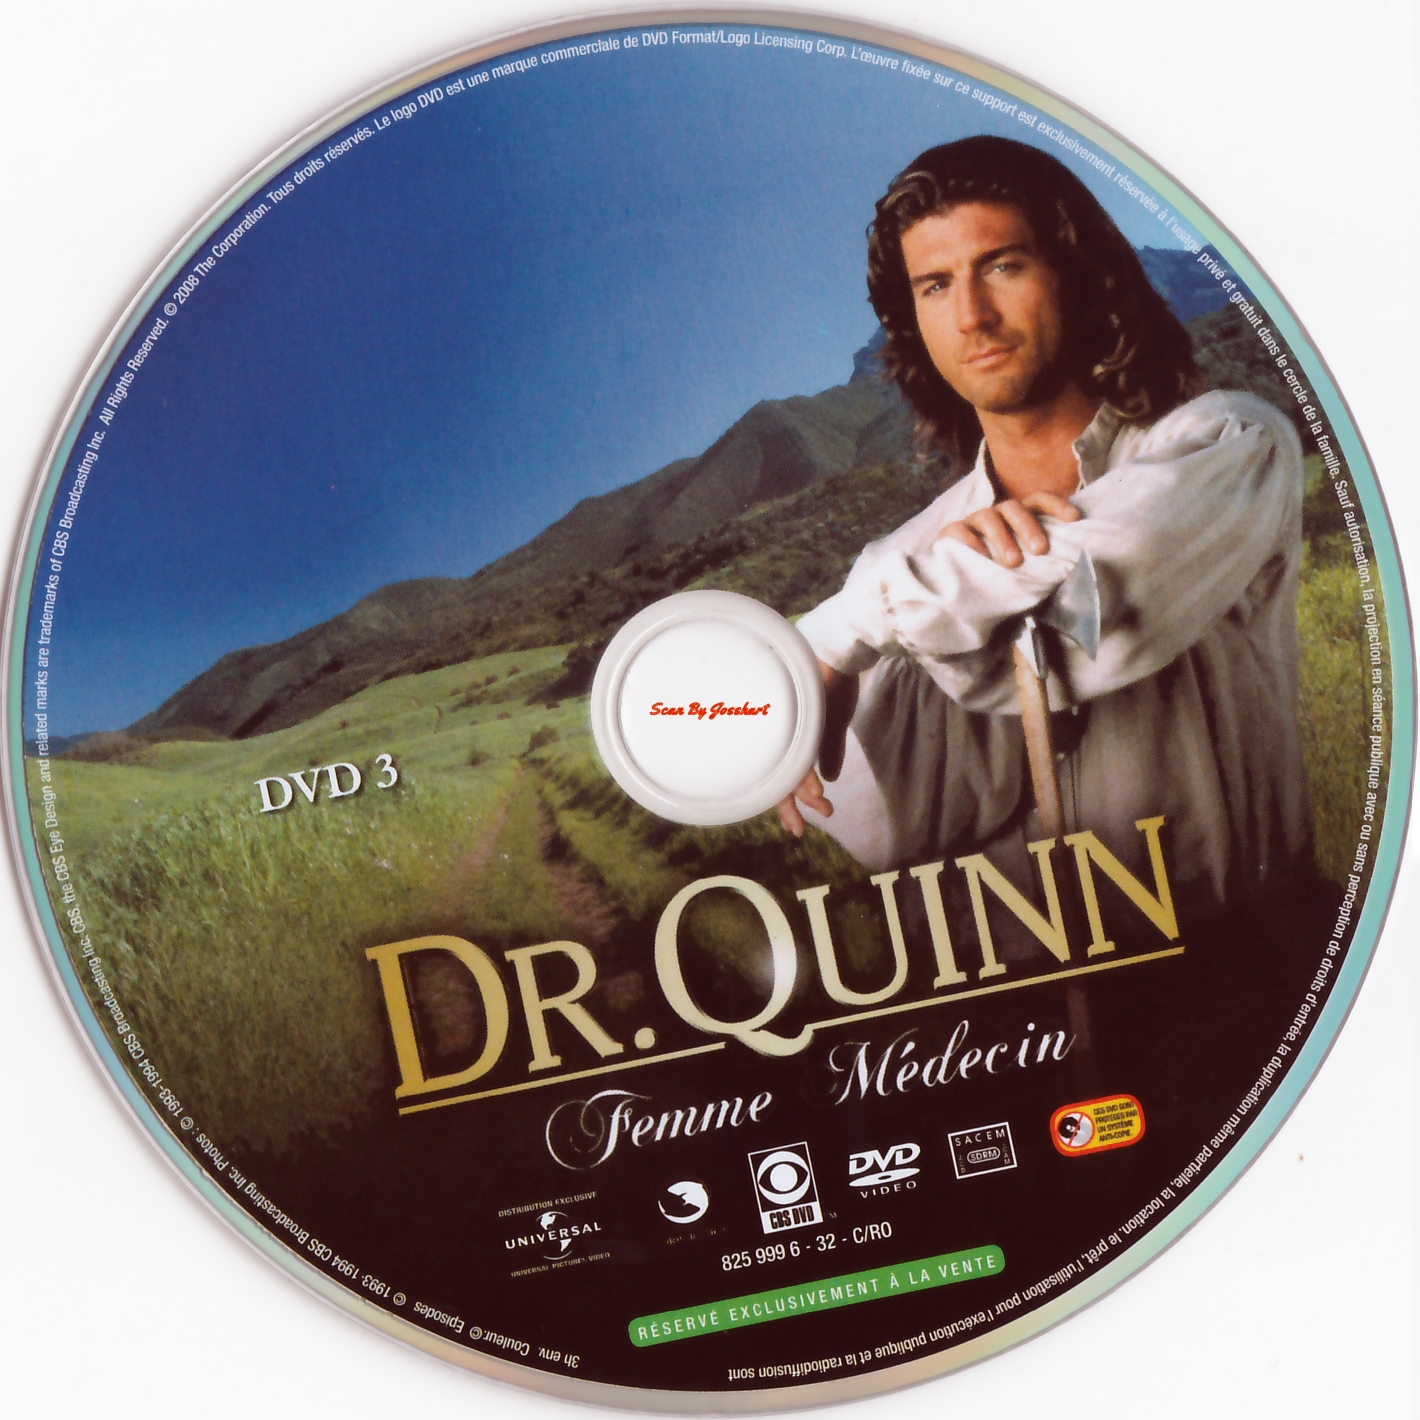 Docteur Quinn femme mdecin - Integrale Saison 2 DISC 3